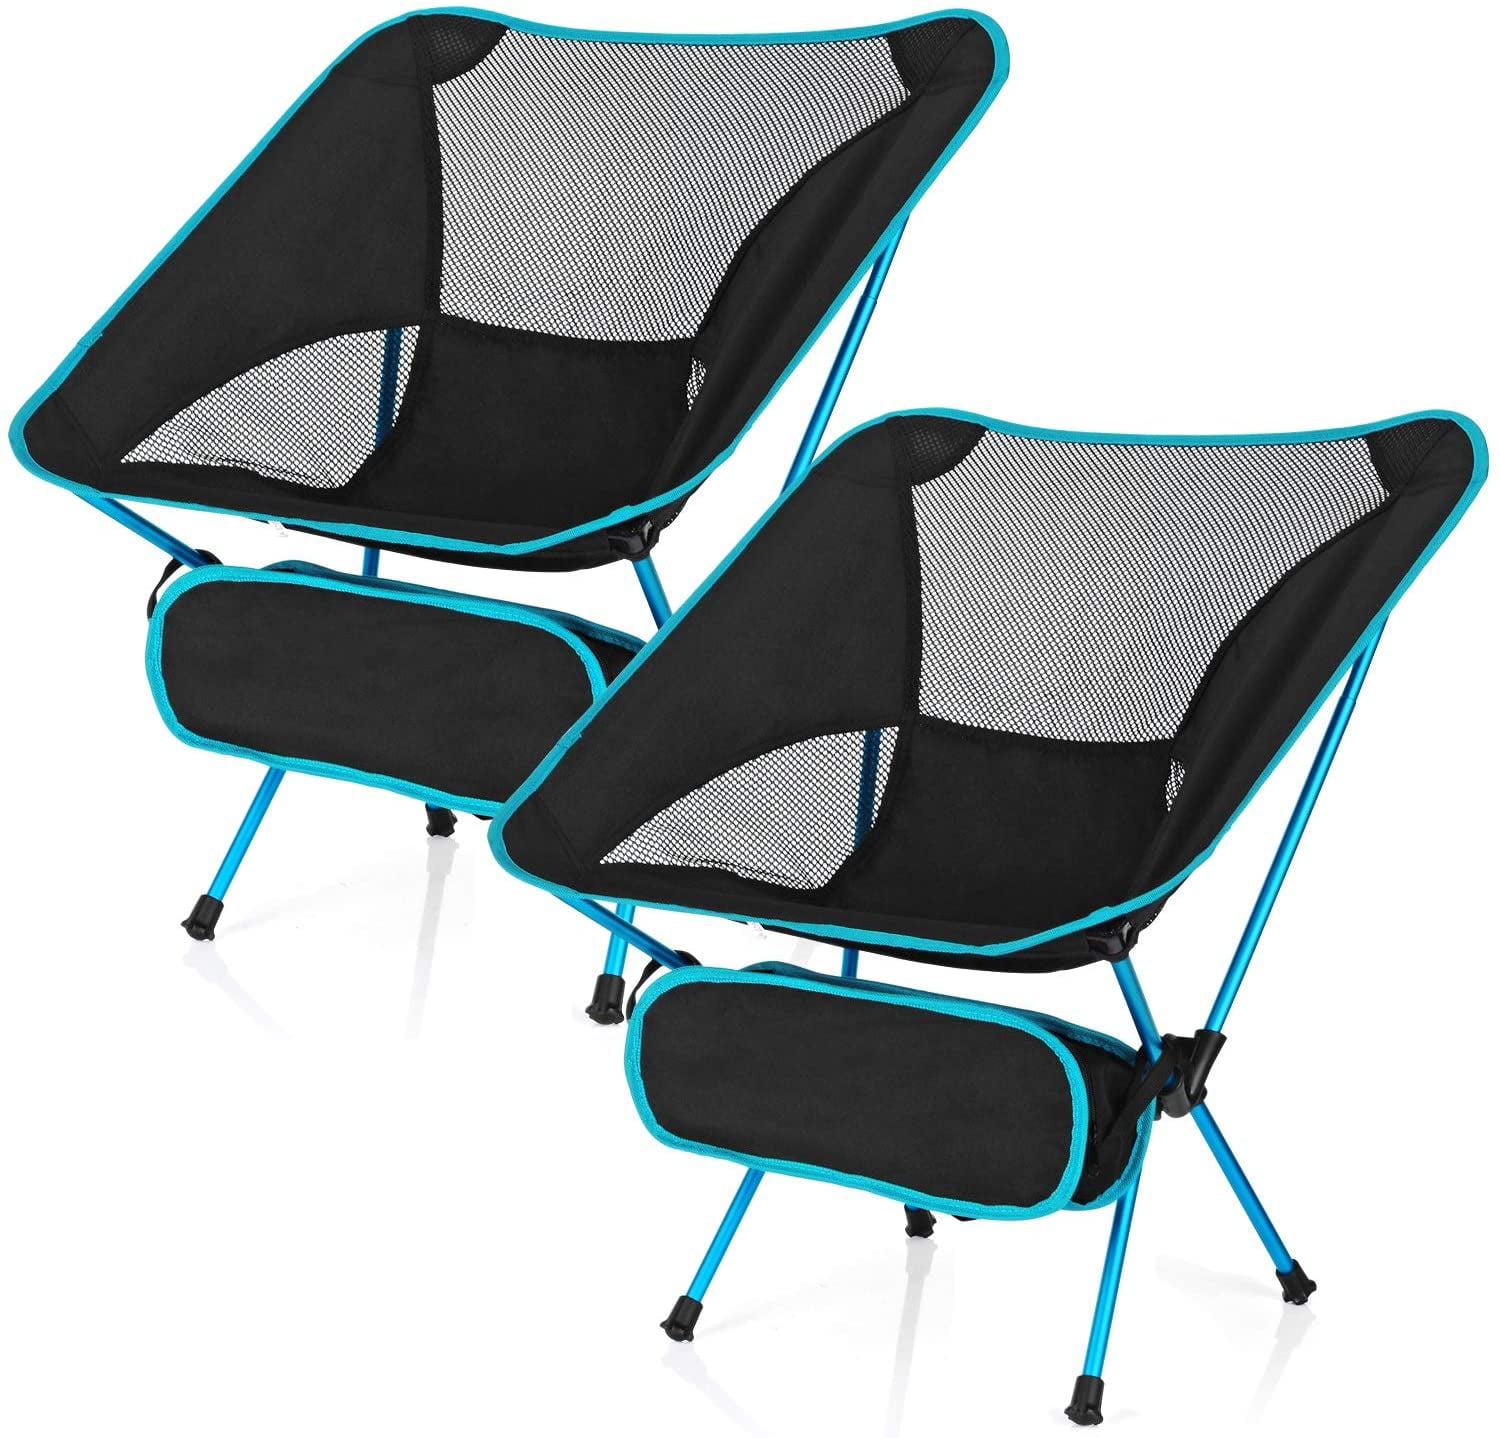 Creatice Bag Beach Chair for Small Space